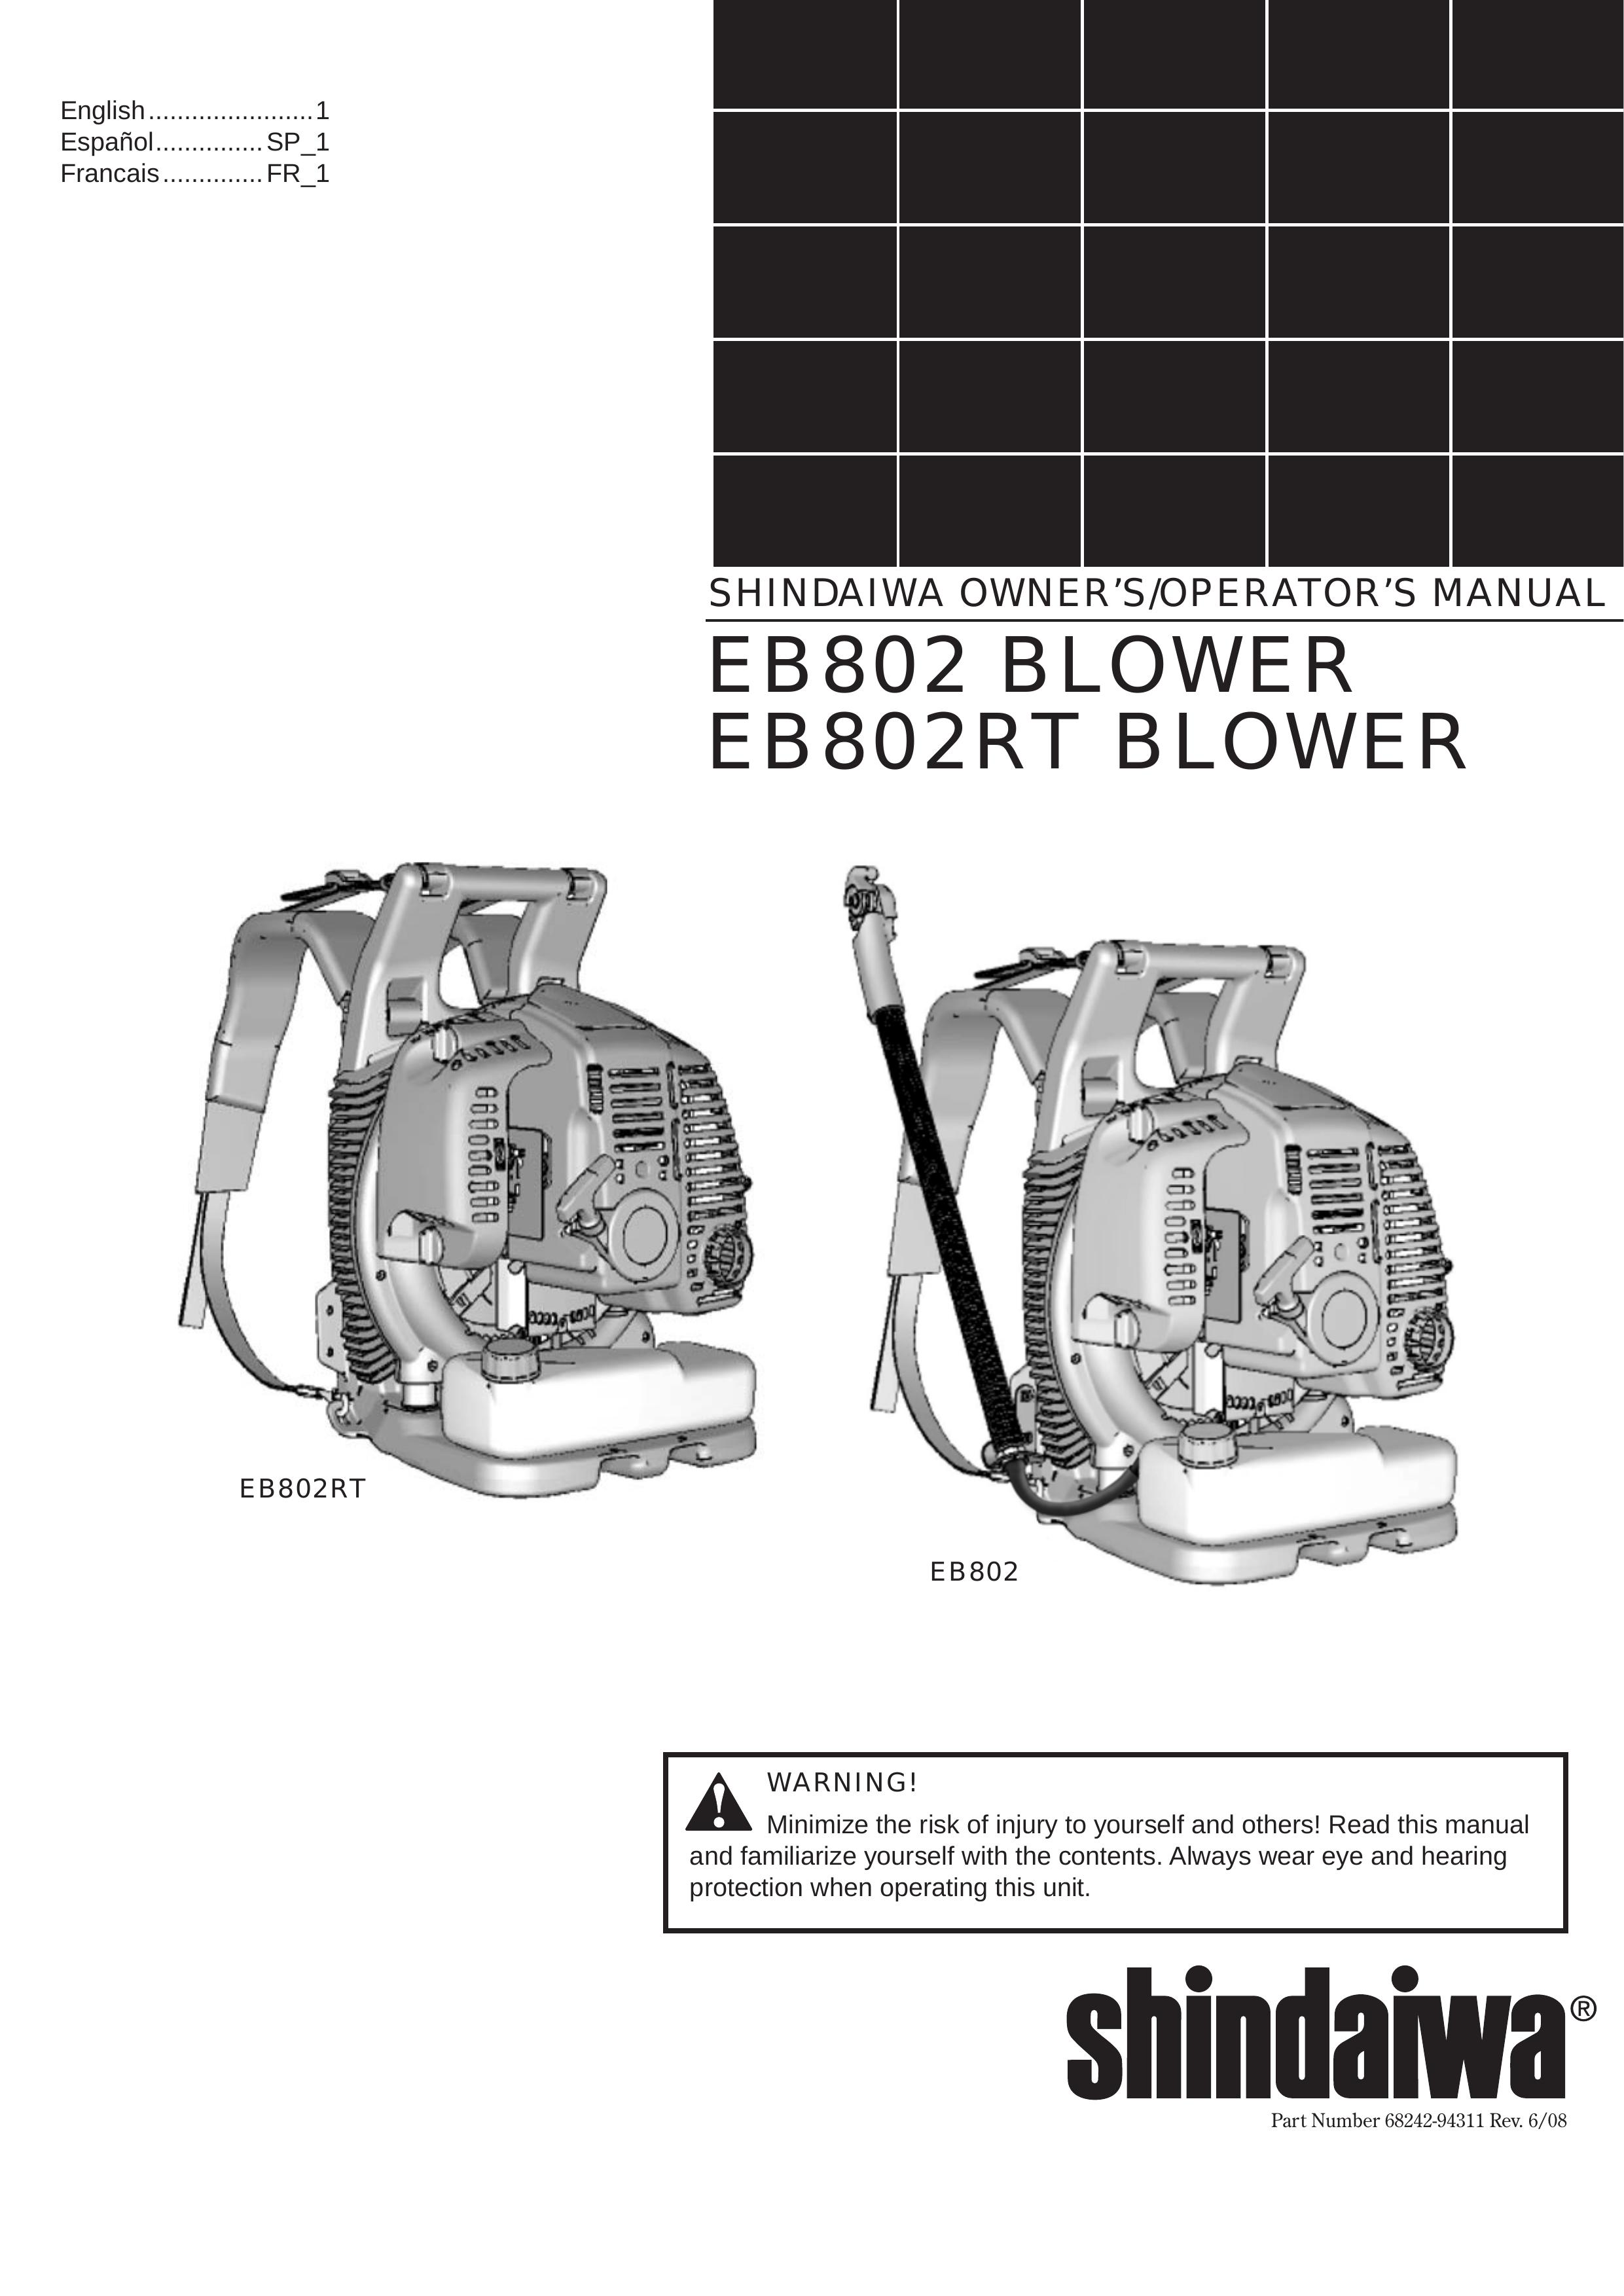 Shindaiwa EB802 Blower User Manual